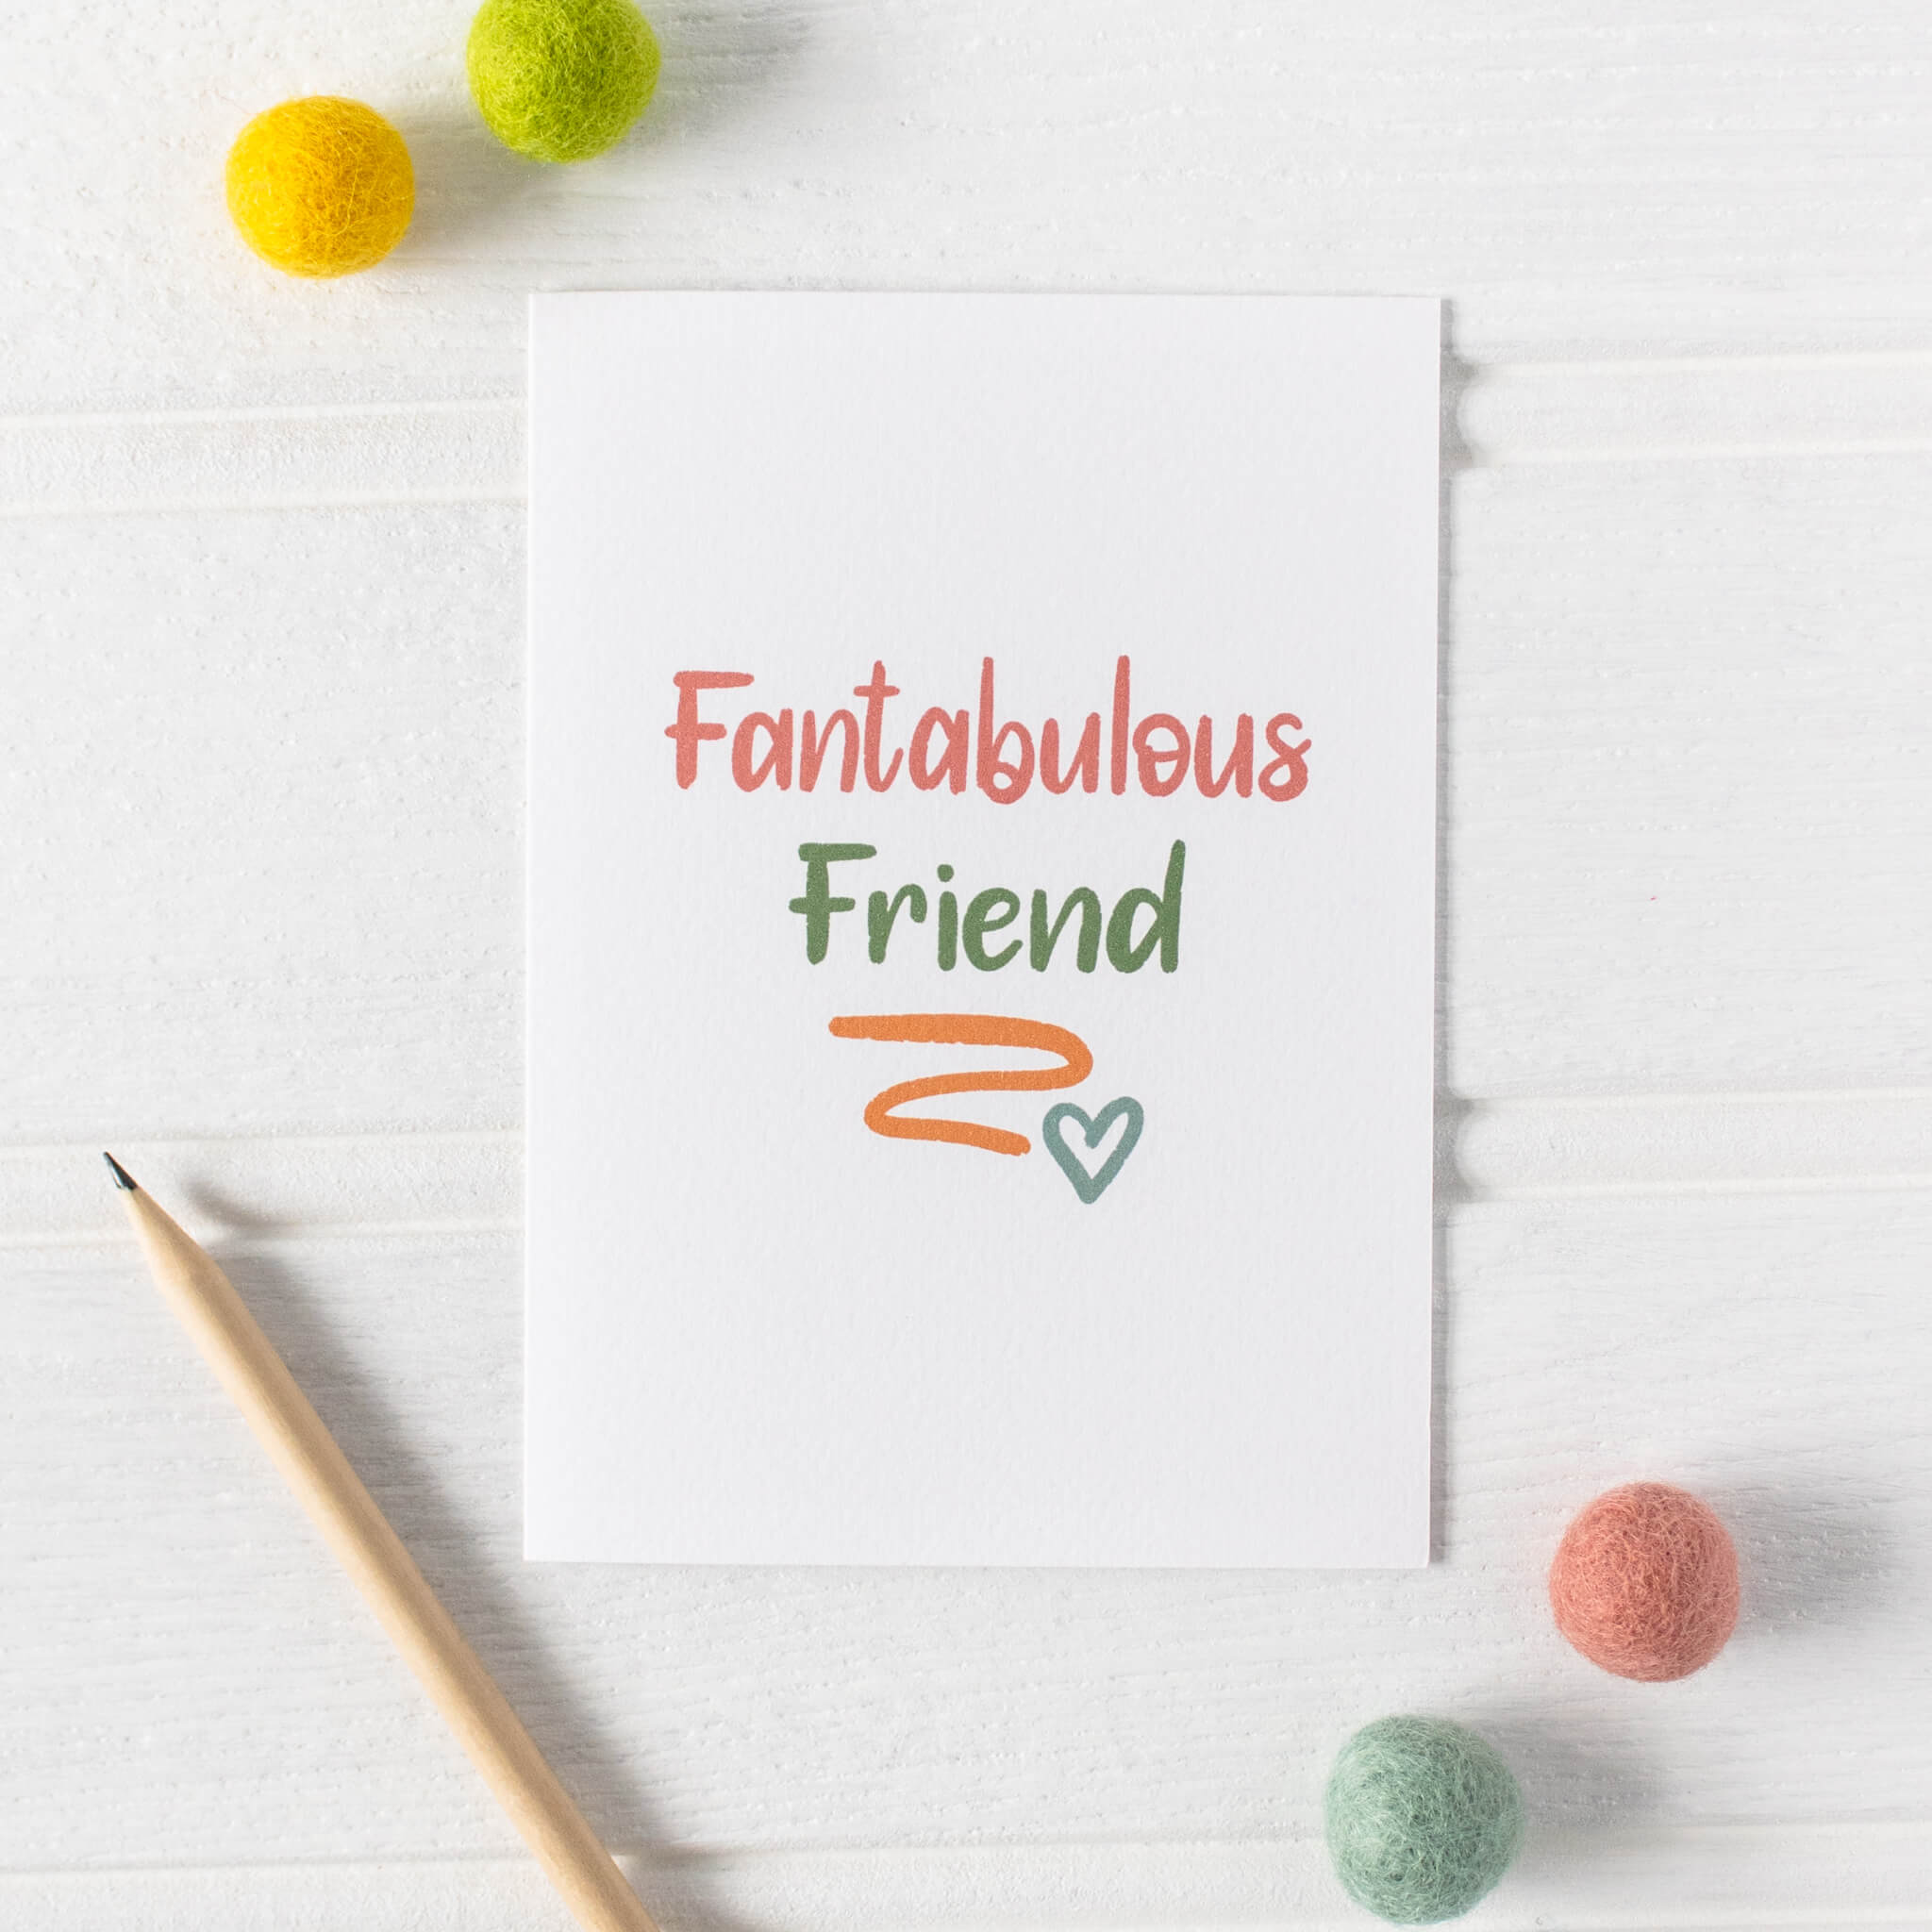 Fantabulous friend friendship card